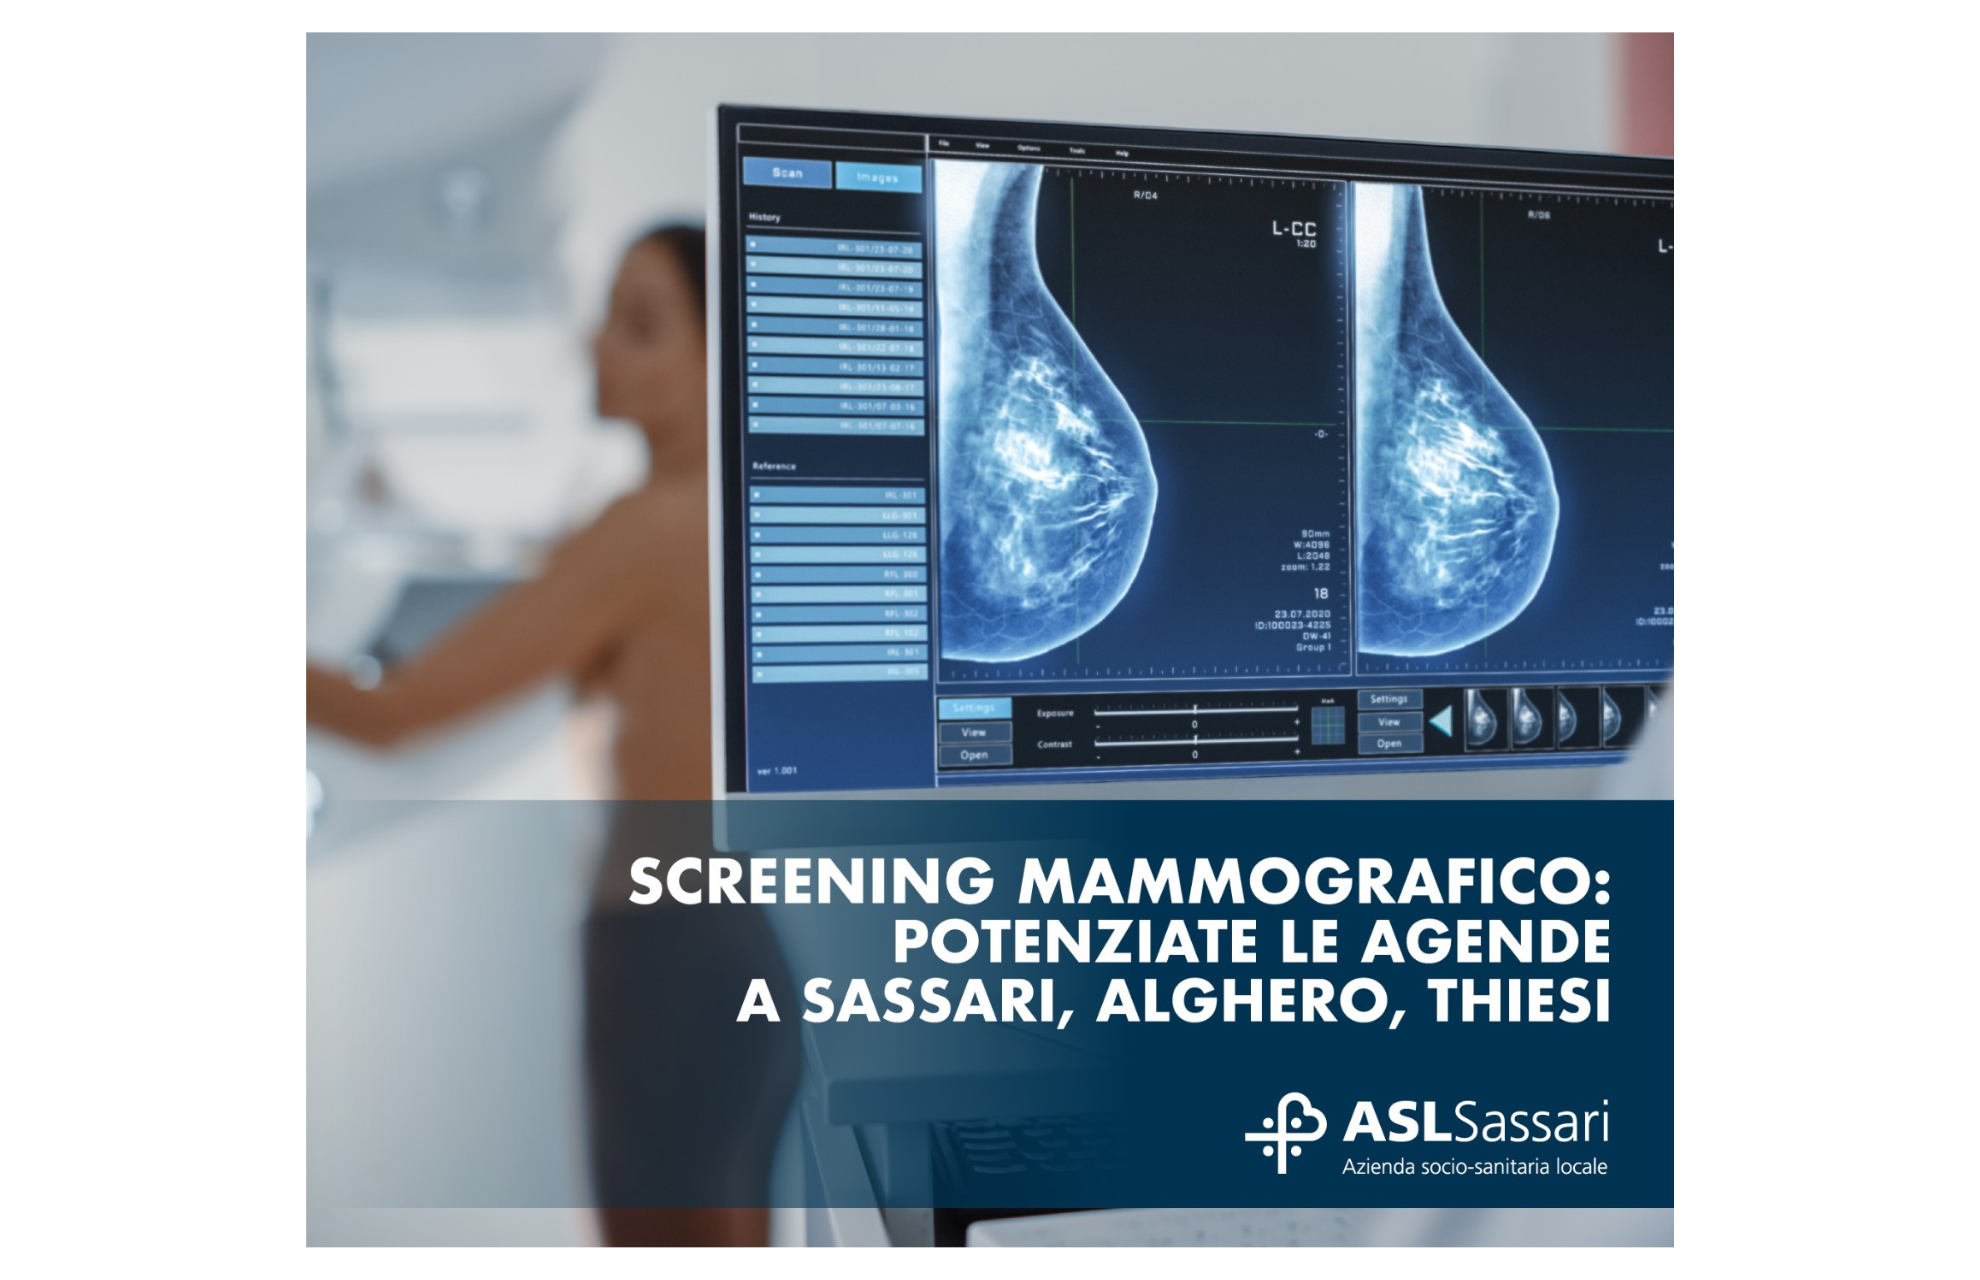 Screening mammografico: potenziamento a Sassari, Alghero e Thiesi